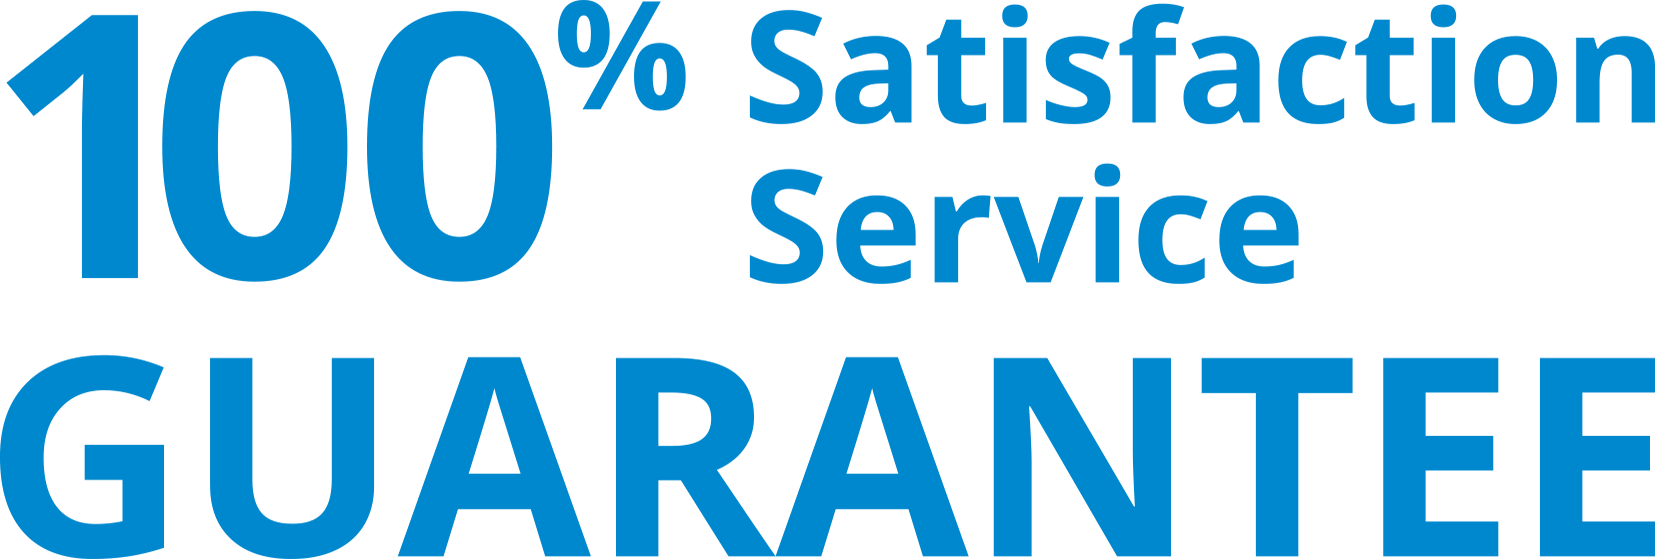 100% satisfaction service guarantee